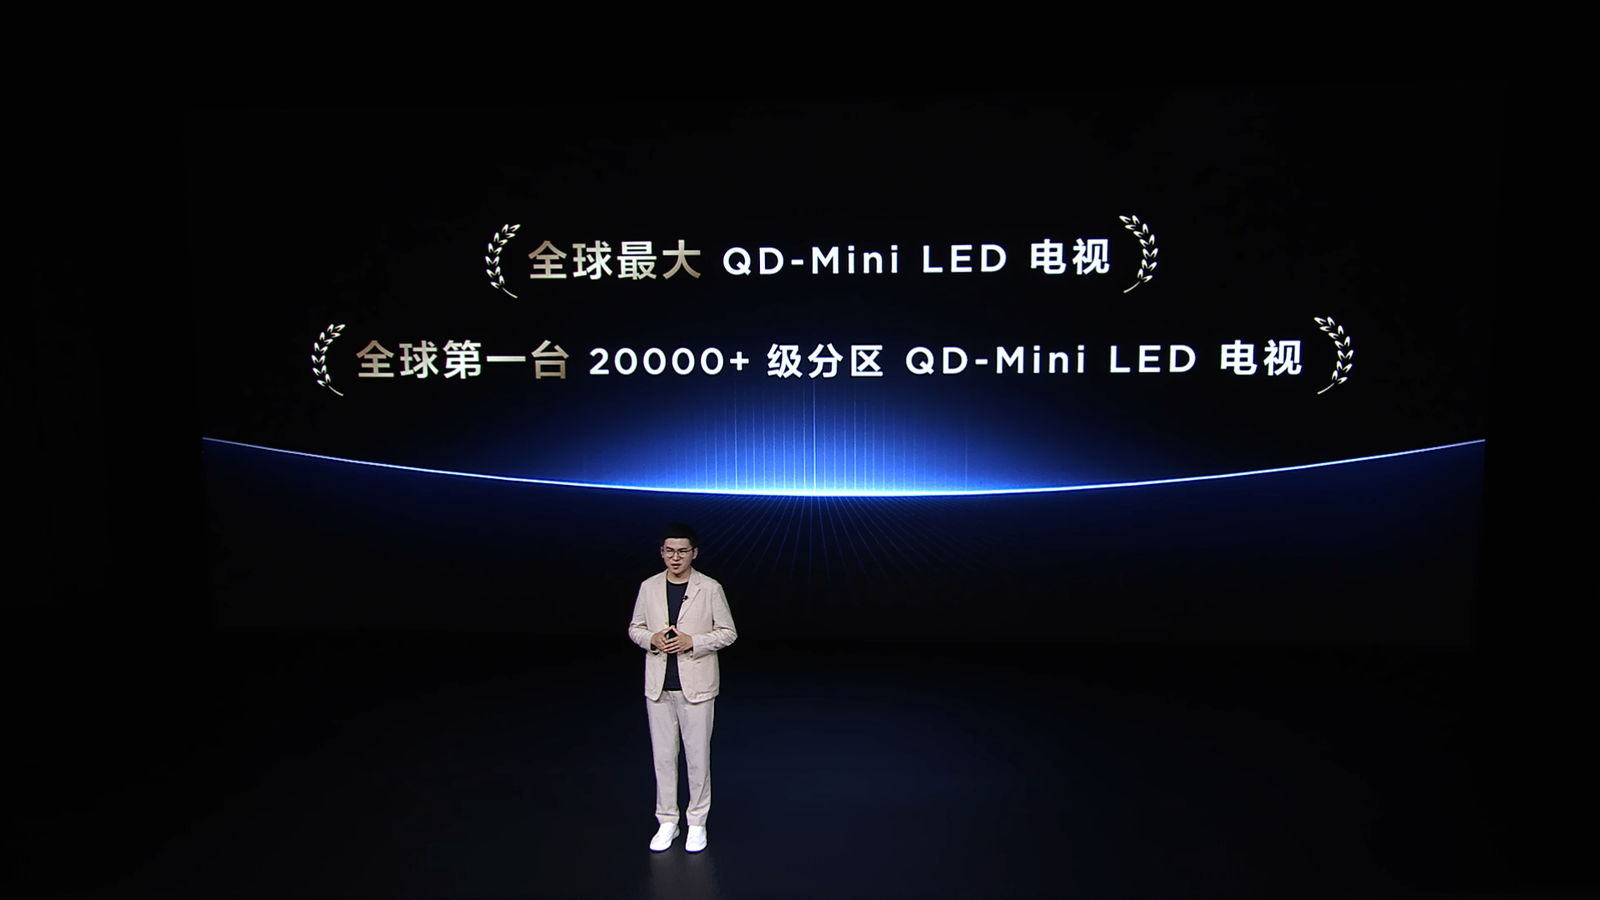 Mini LED新巅峰115吋X11G Max正式上市，TCL持续领跑超大屏电视市场